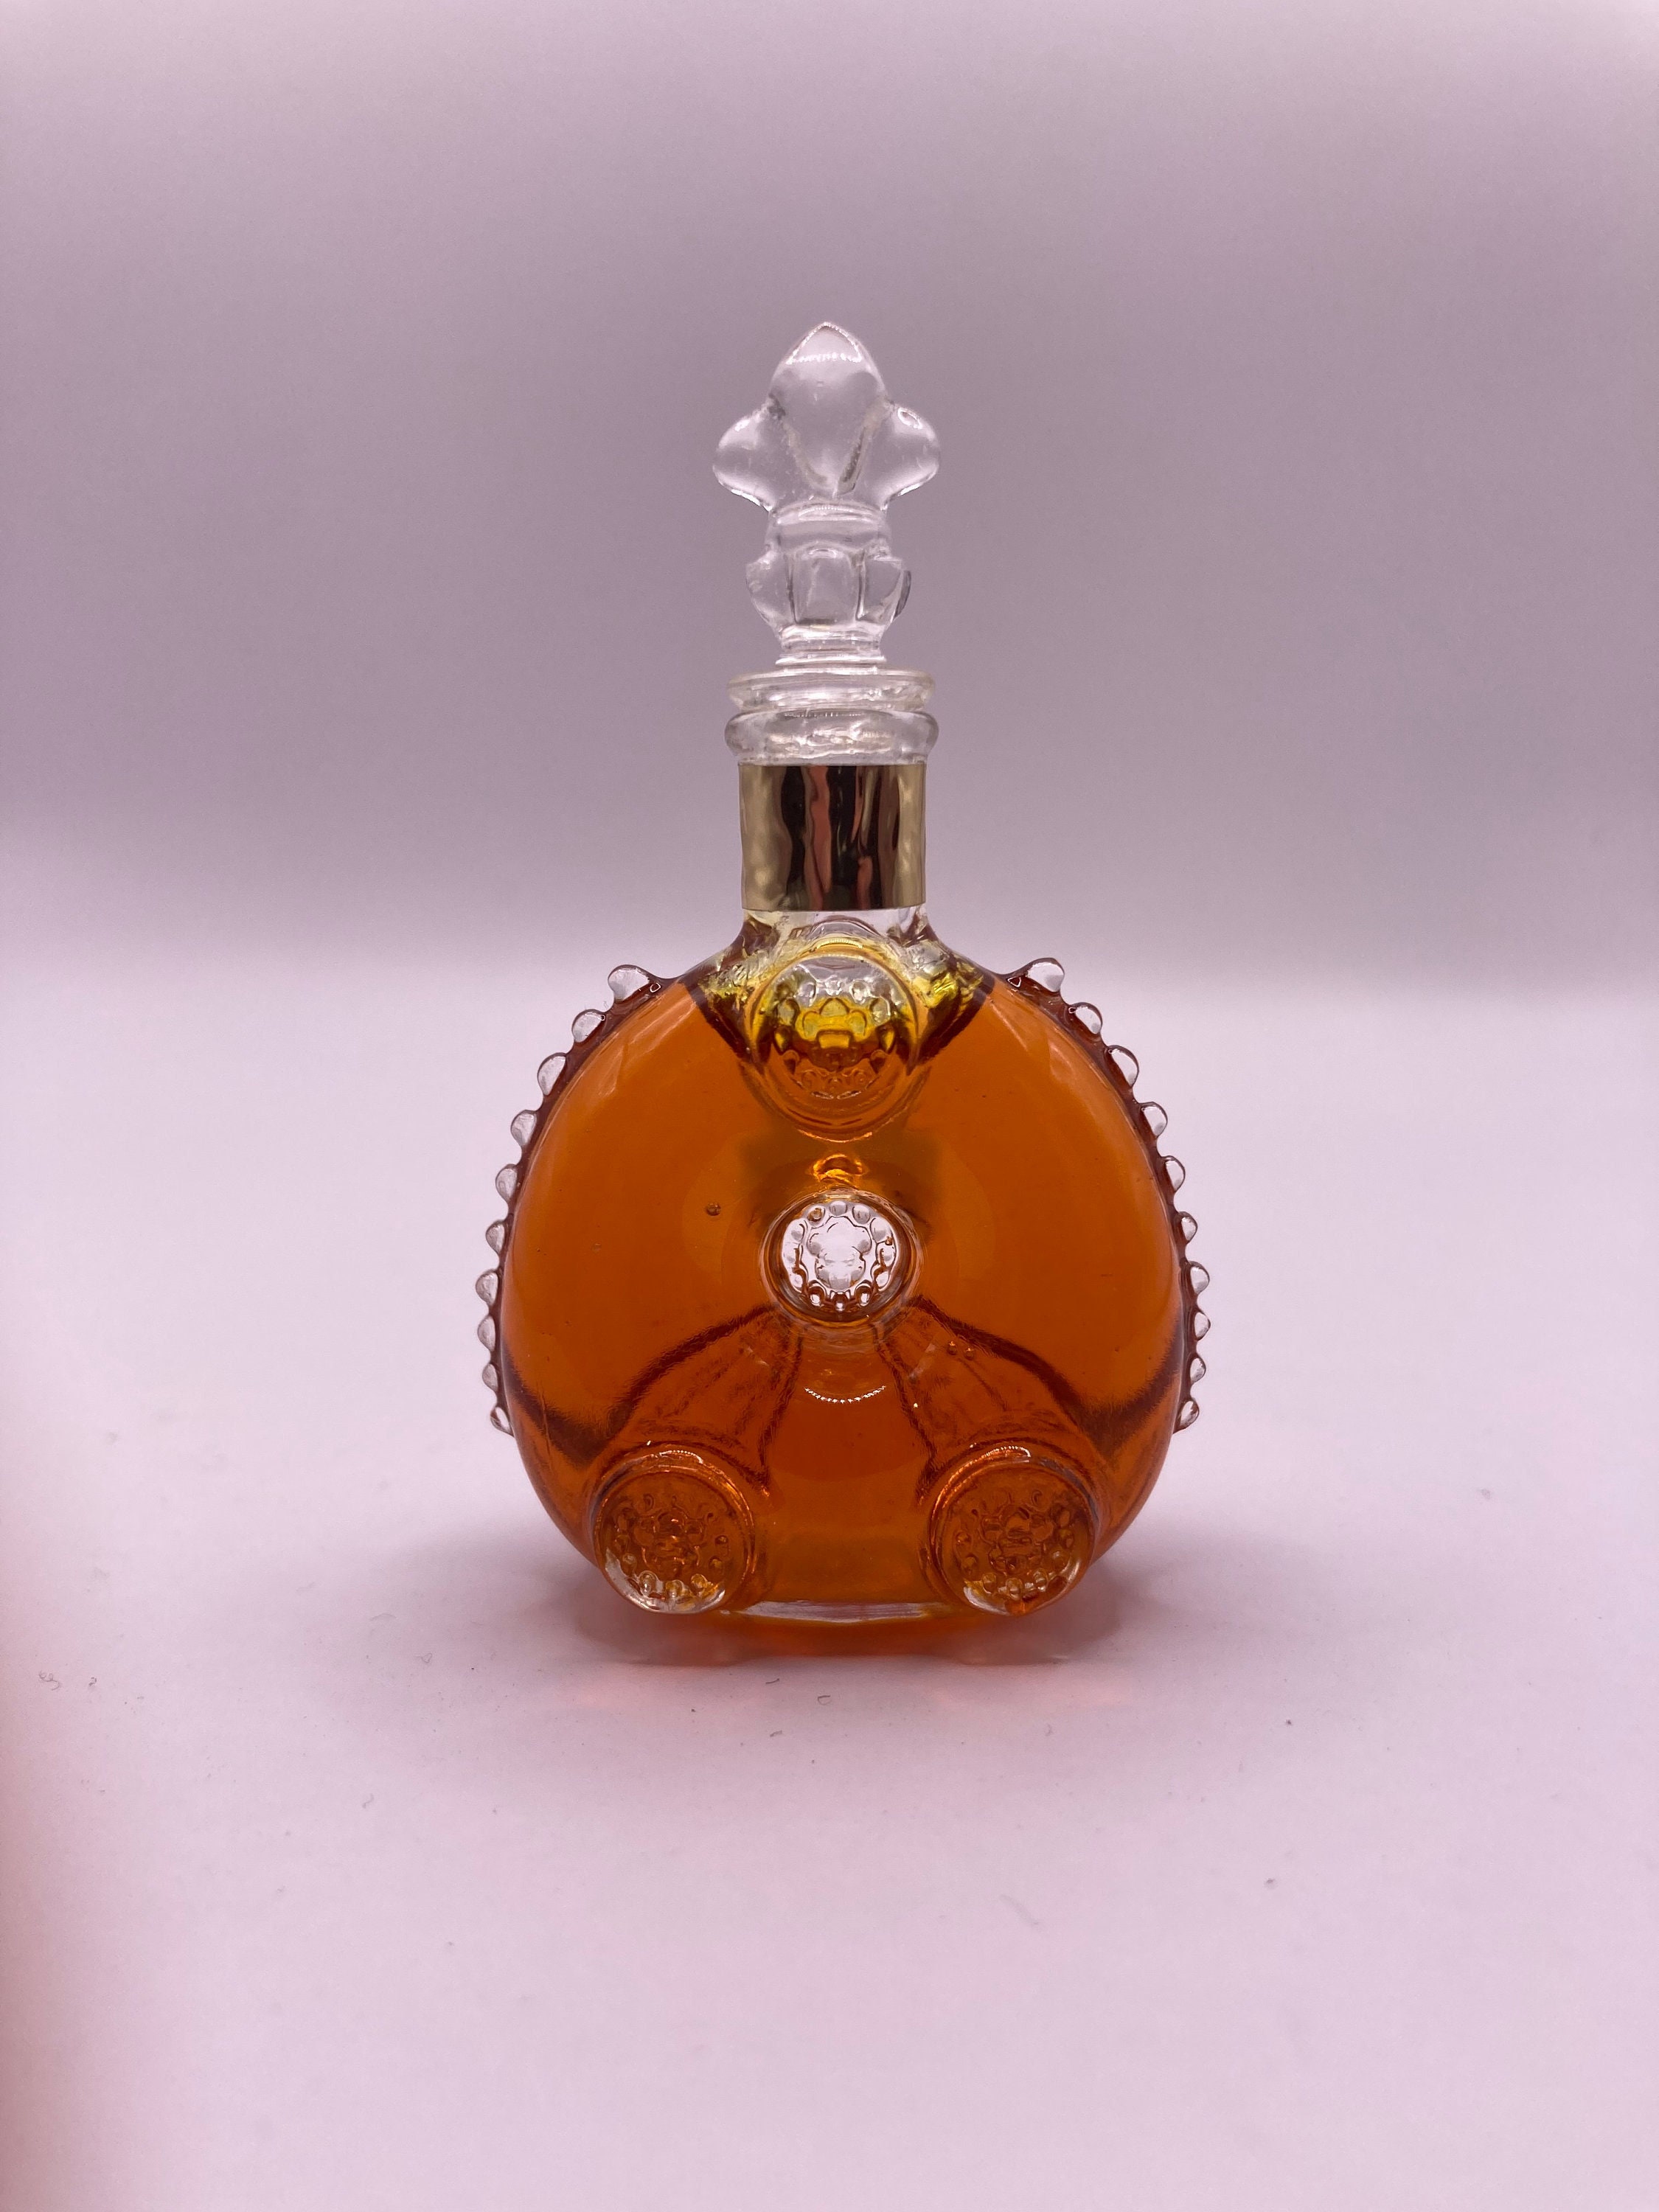 REMY MARTIN LOUIS XIII Cognac Decanter Empty Bottle & Box $170.50